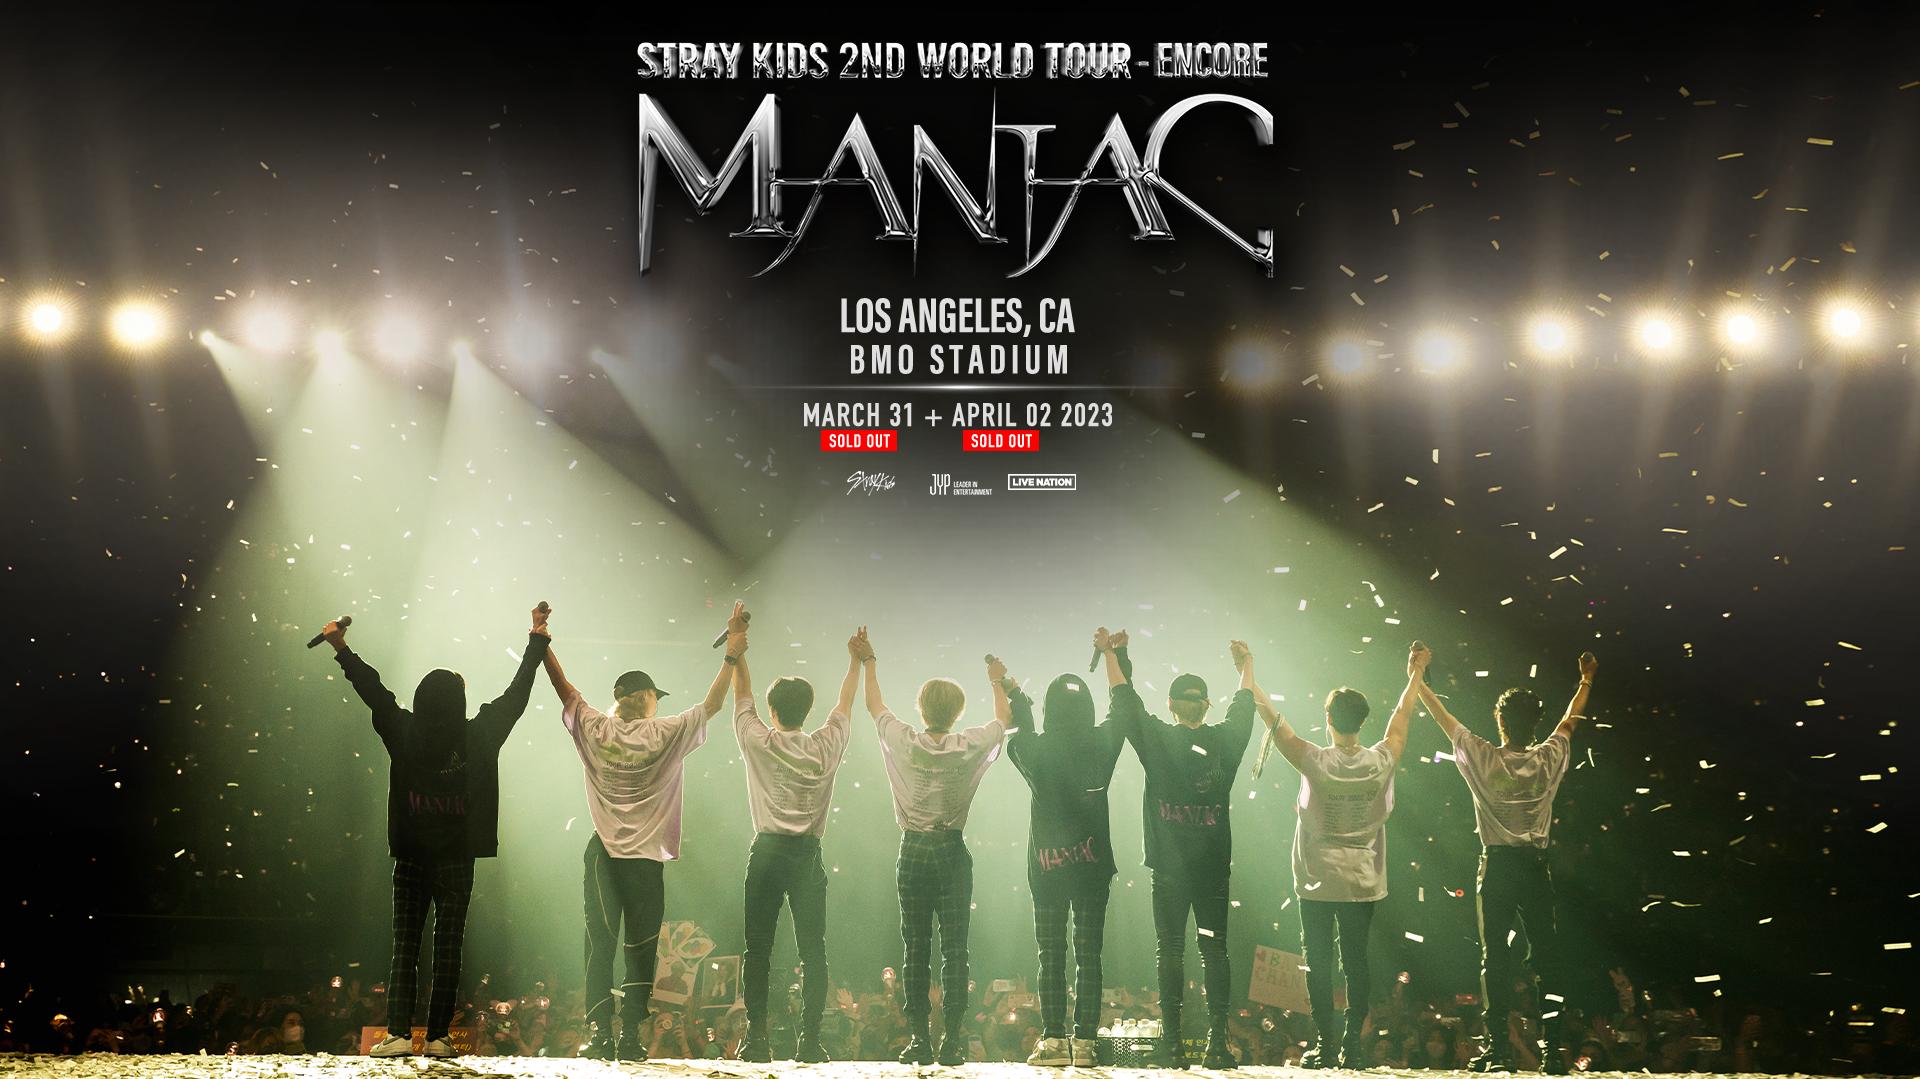 Stray Kids 2nd World Tour Maniac Encore Bmo Stadium